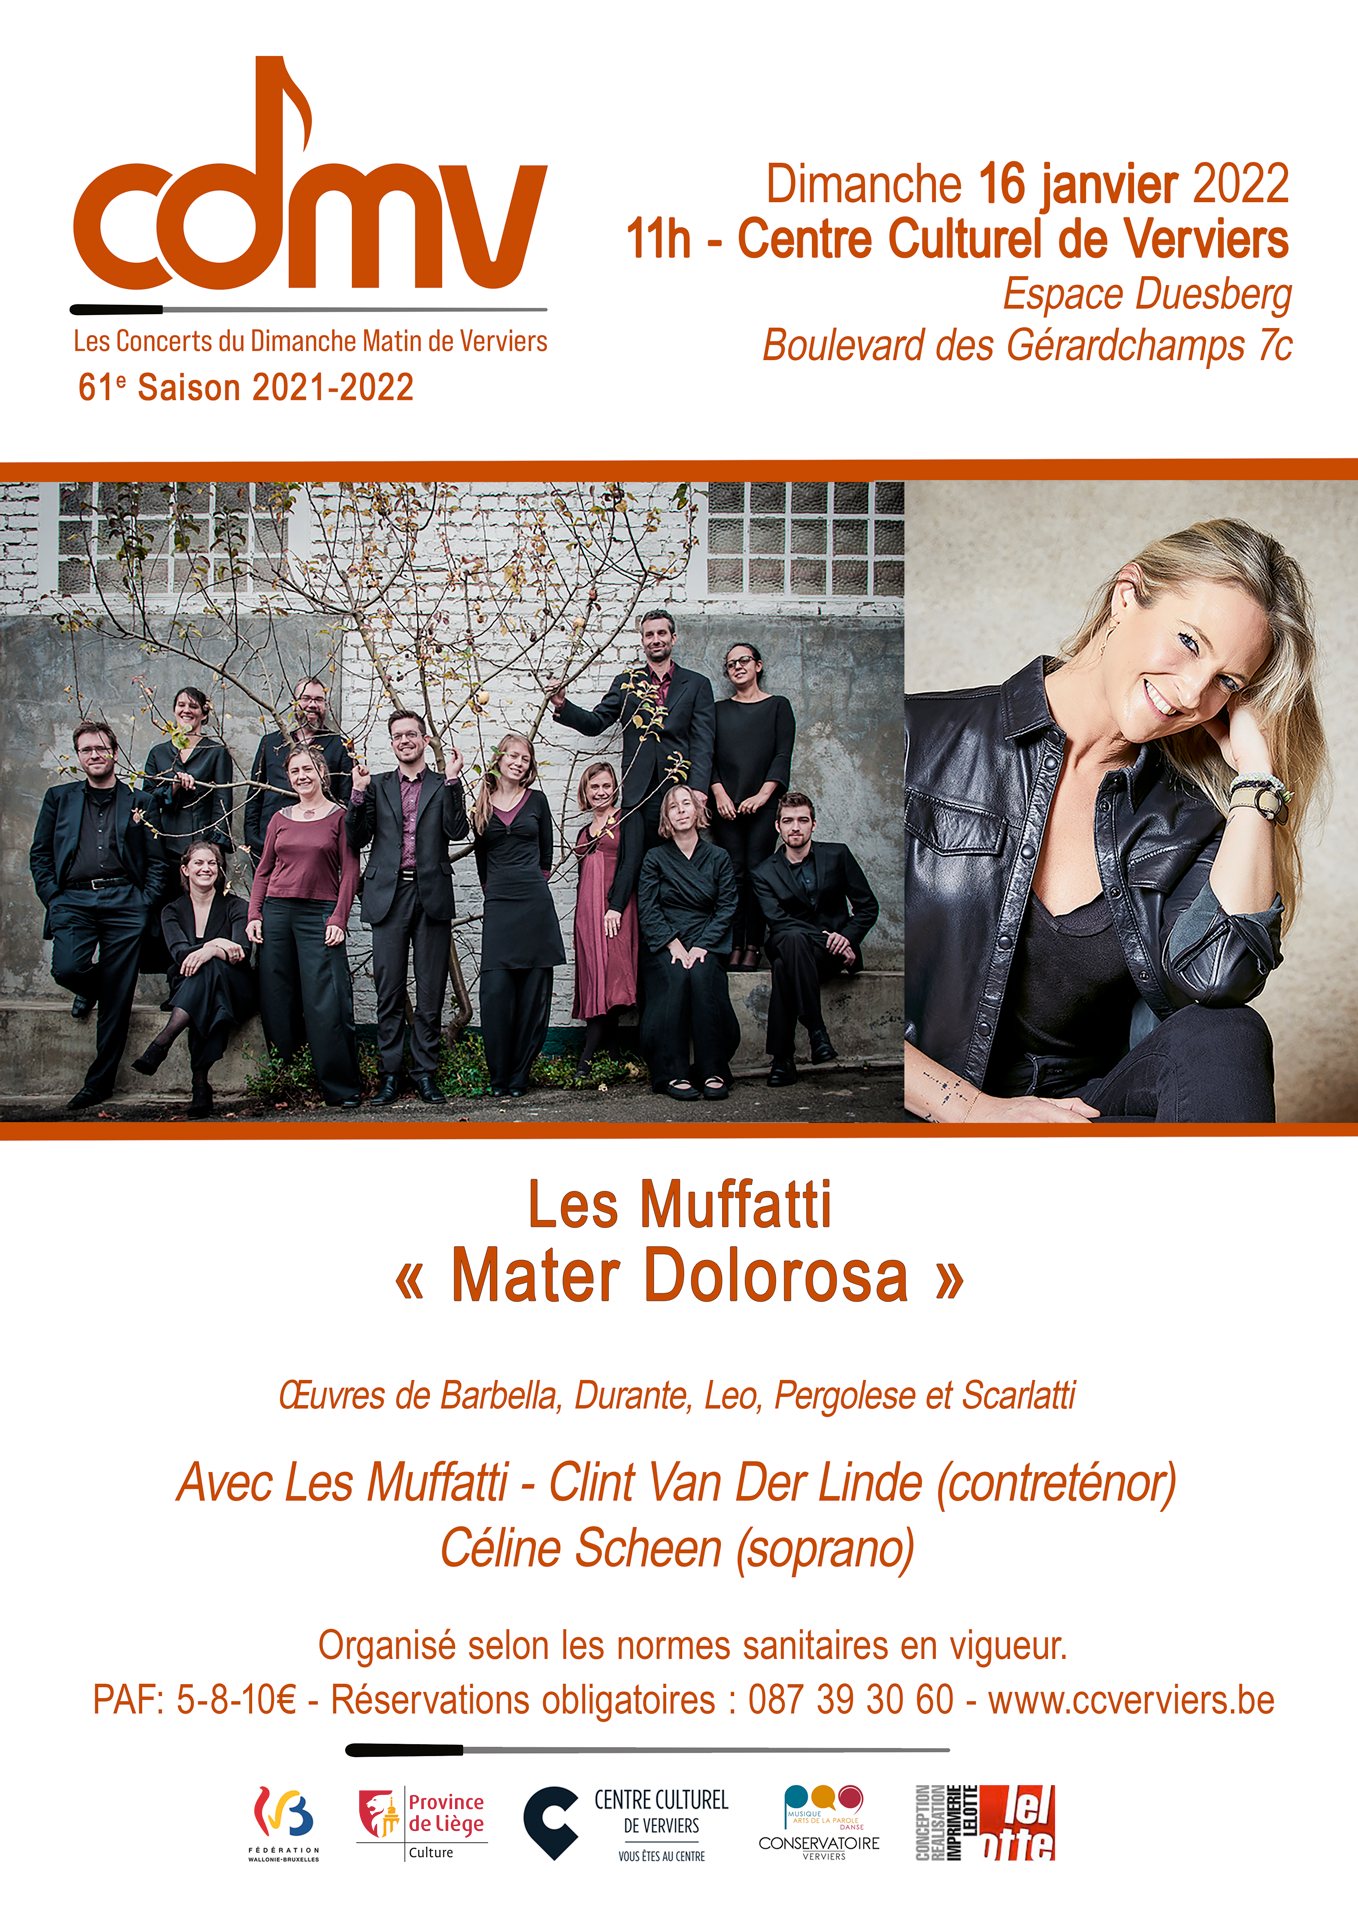 Les Muffatti « Mater Dolorosa » | Concerts du Dimanche Matin / Places ...